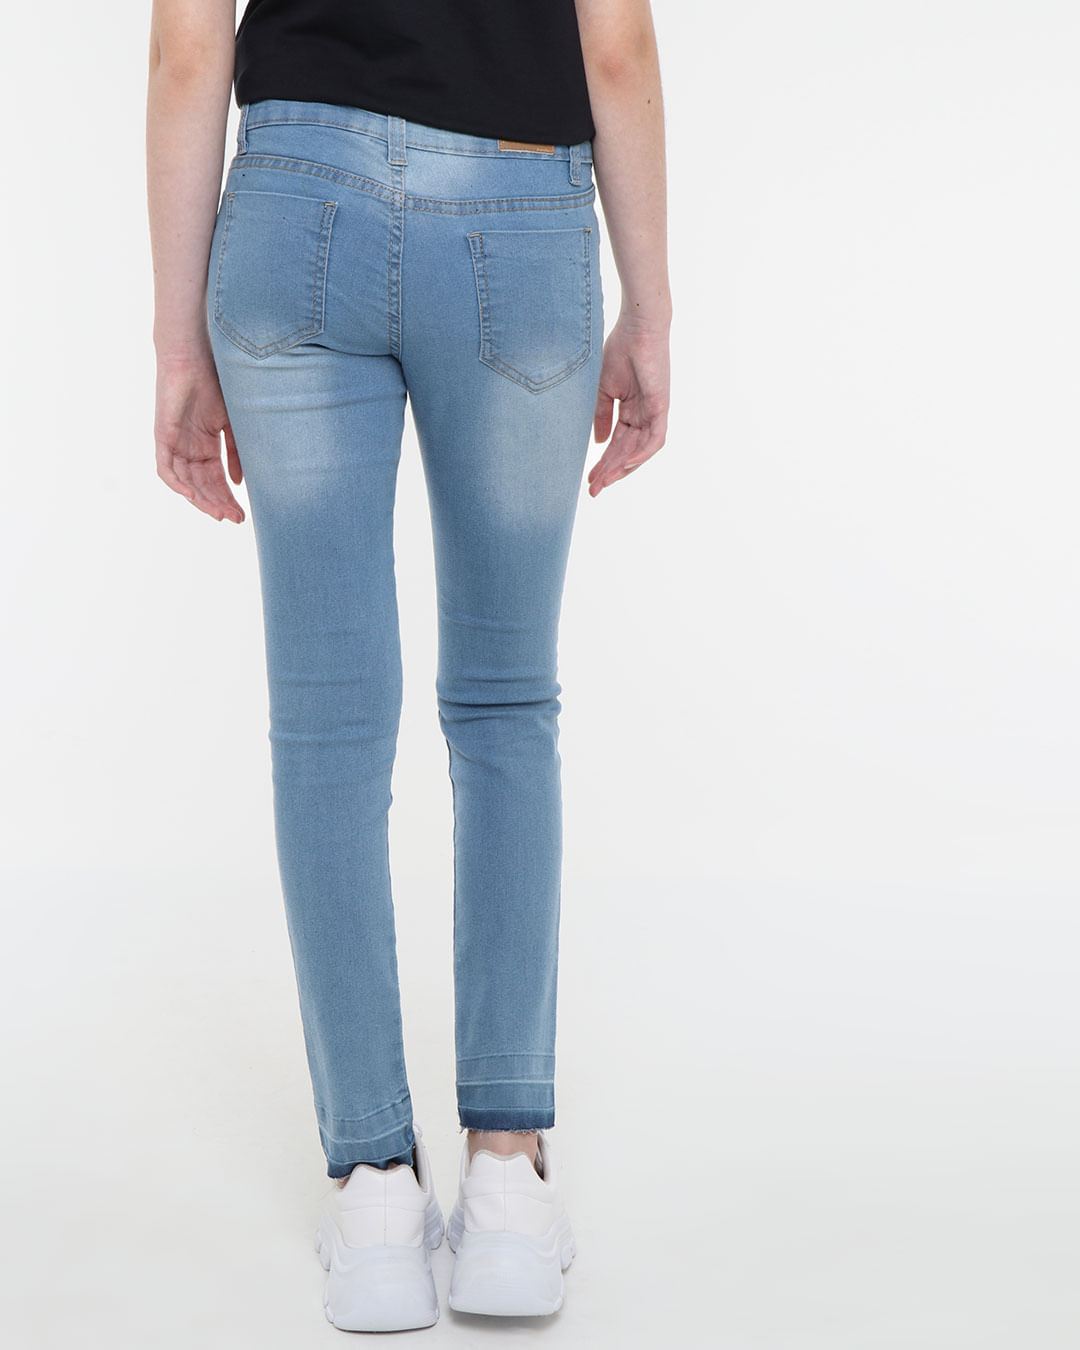 Calca-10486-Jeans-Clara-Desfeita-F-1016---Blue-Jeans-Medio